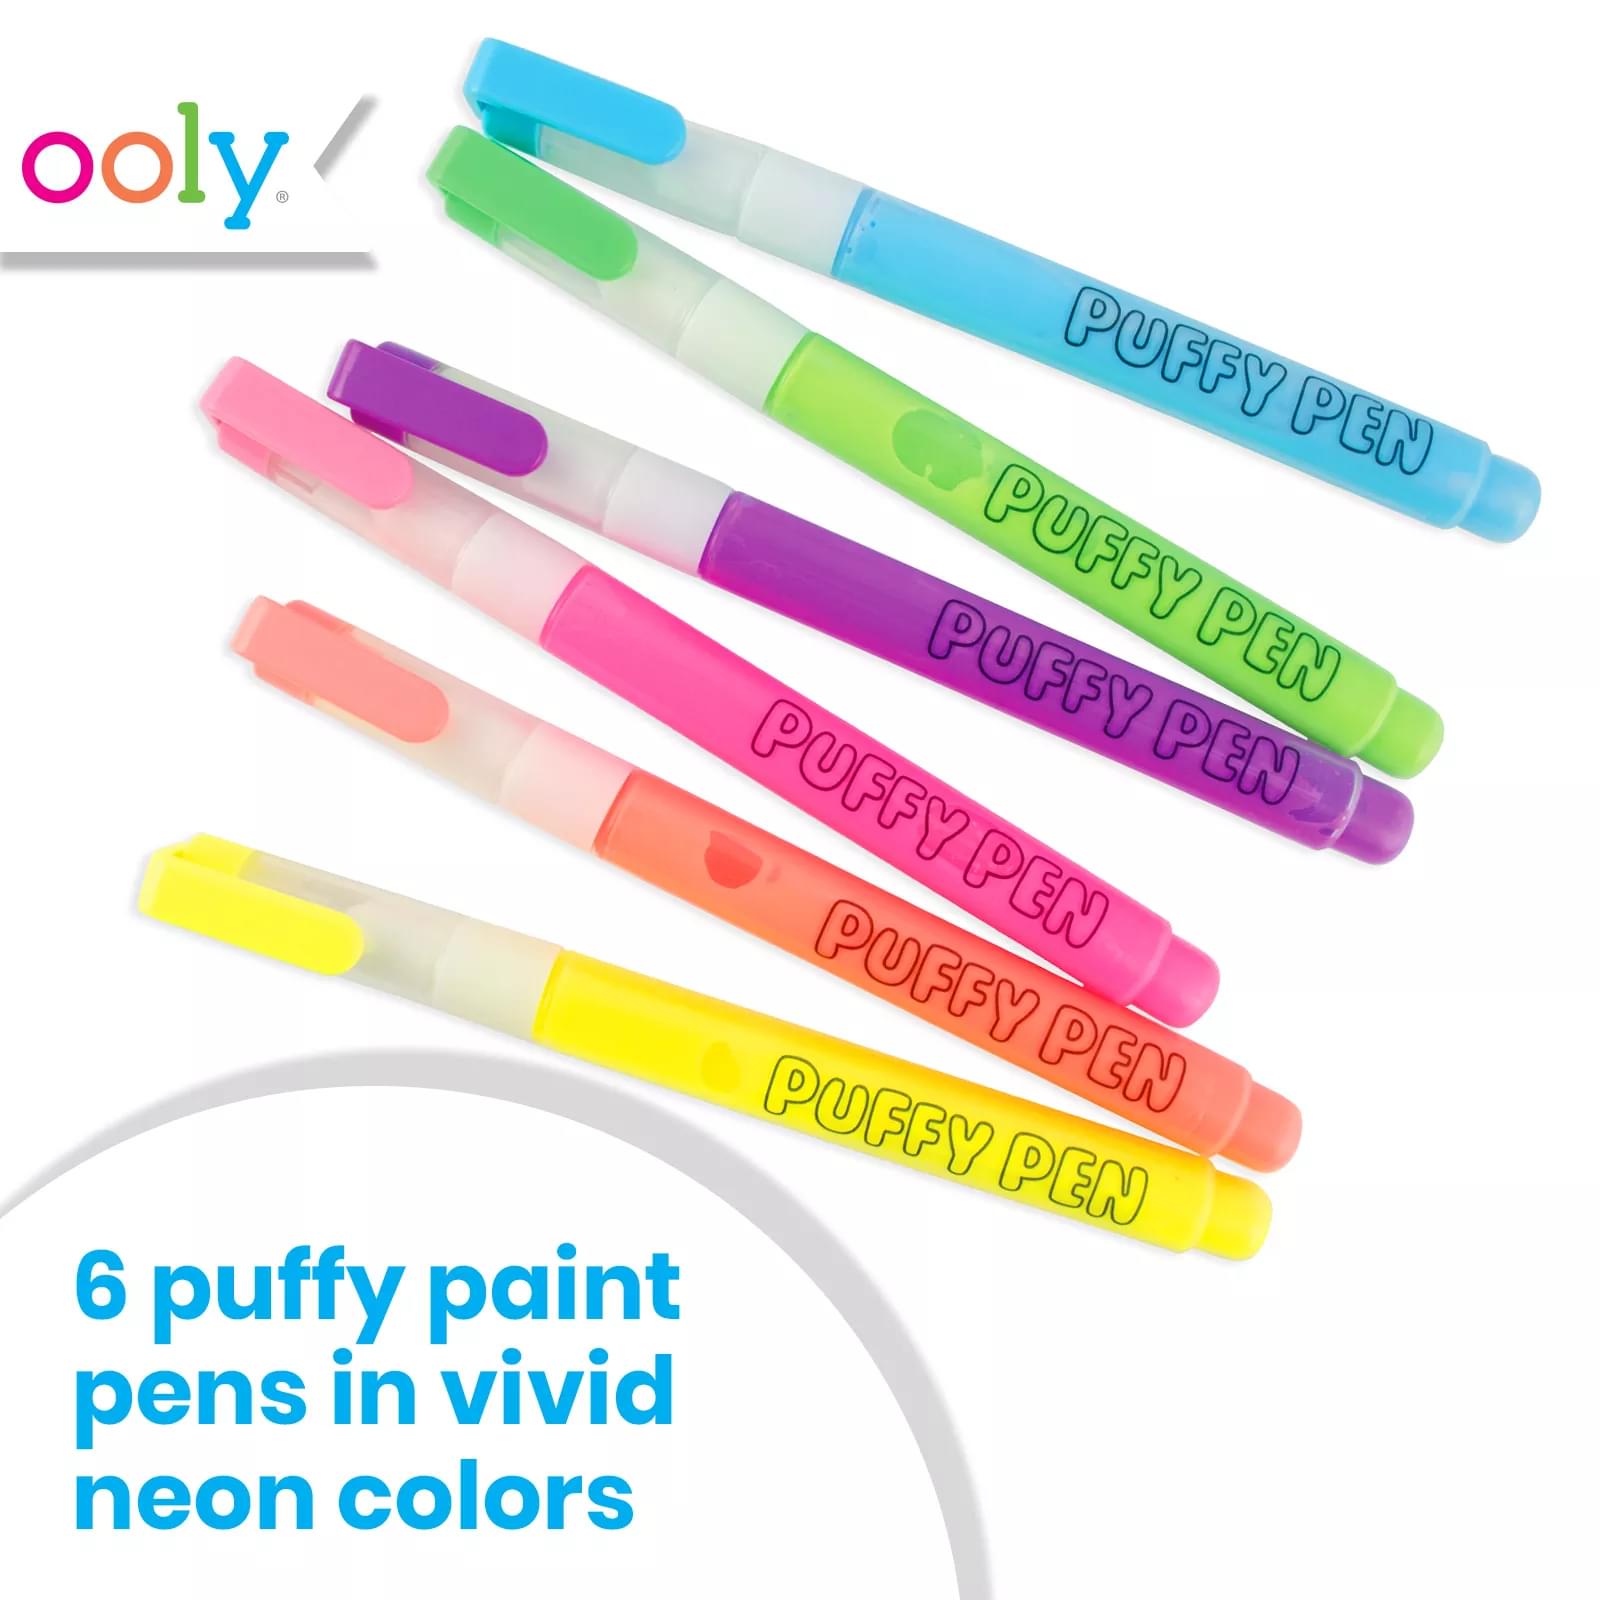 Magic Puffy Pens, Diy Bubble Popcorn Drawing Pens, Magic Puffy Pens For Kids  Children, Magic Popcorn Color Paint Pen, Puffy Bubble Pen Puffy 3d Art Sa